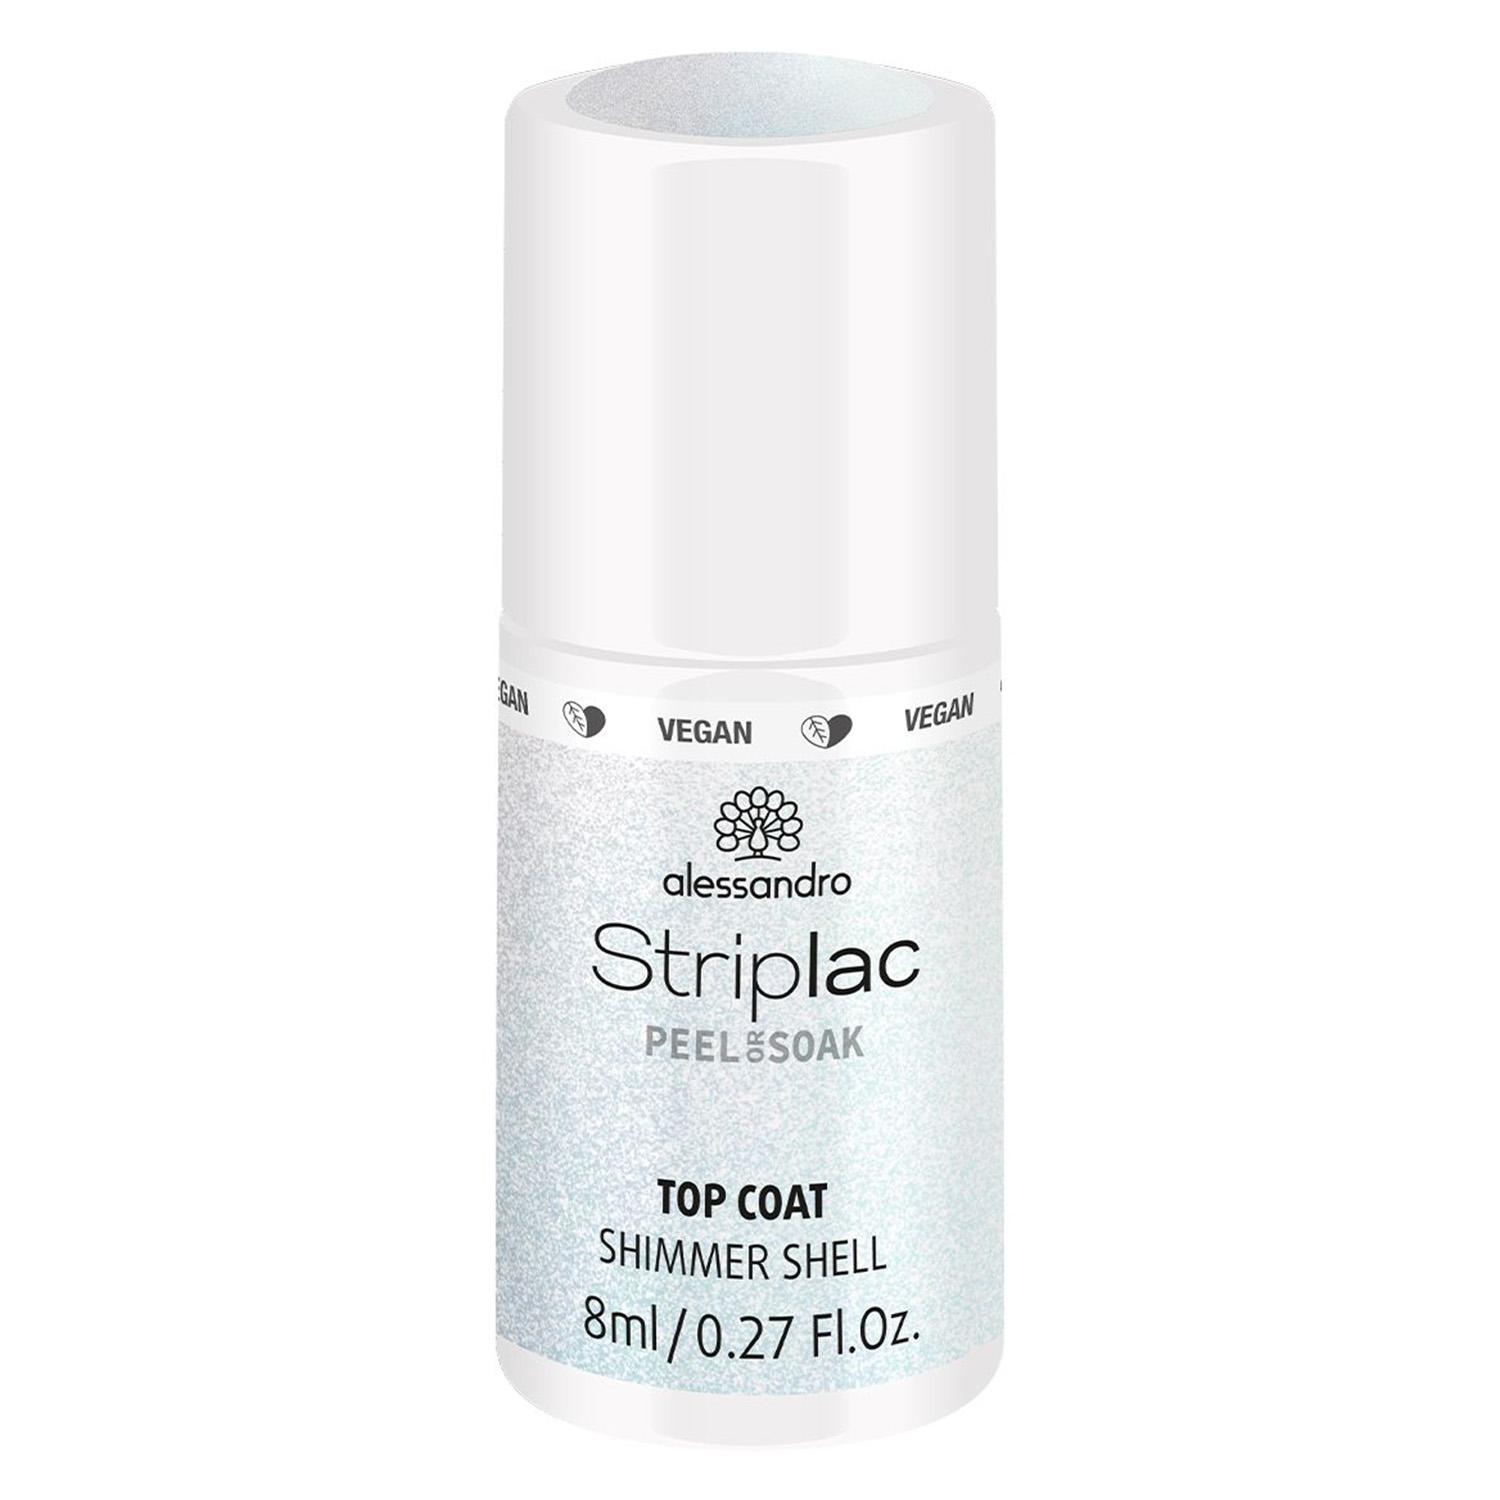 Striplac Peel or Soak - Top Coat Shimmer Shell